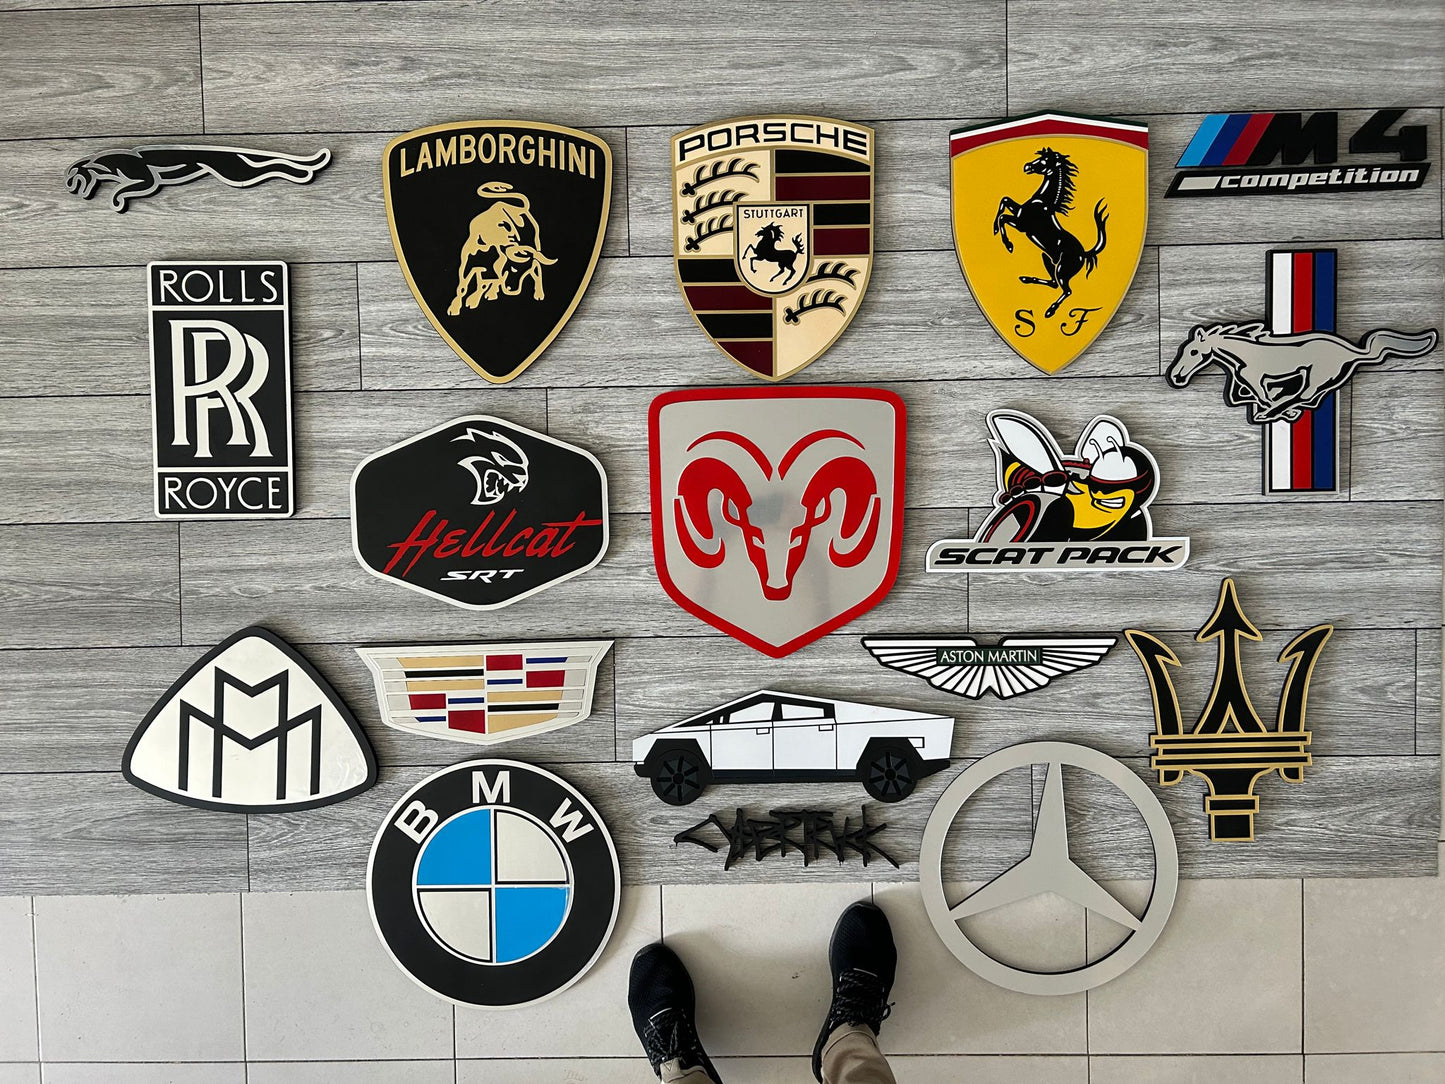 Maserati Wall Decor,Maserati Wooden Sign, Maserati emblem,Vehicle Wall Plaque, Showroom, Cars Showroom Garage,Car Emblems